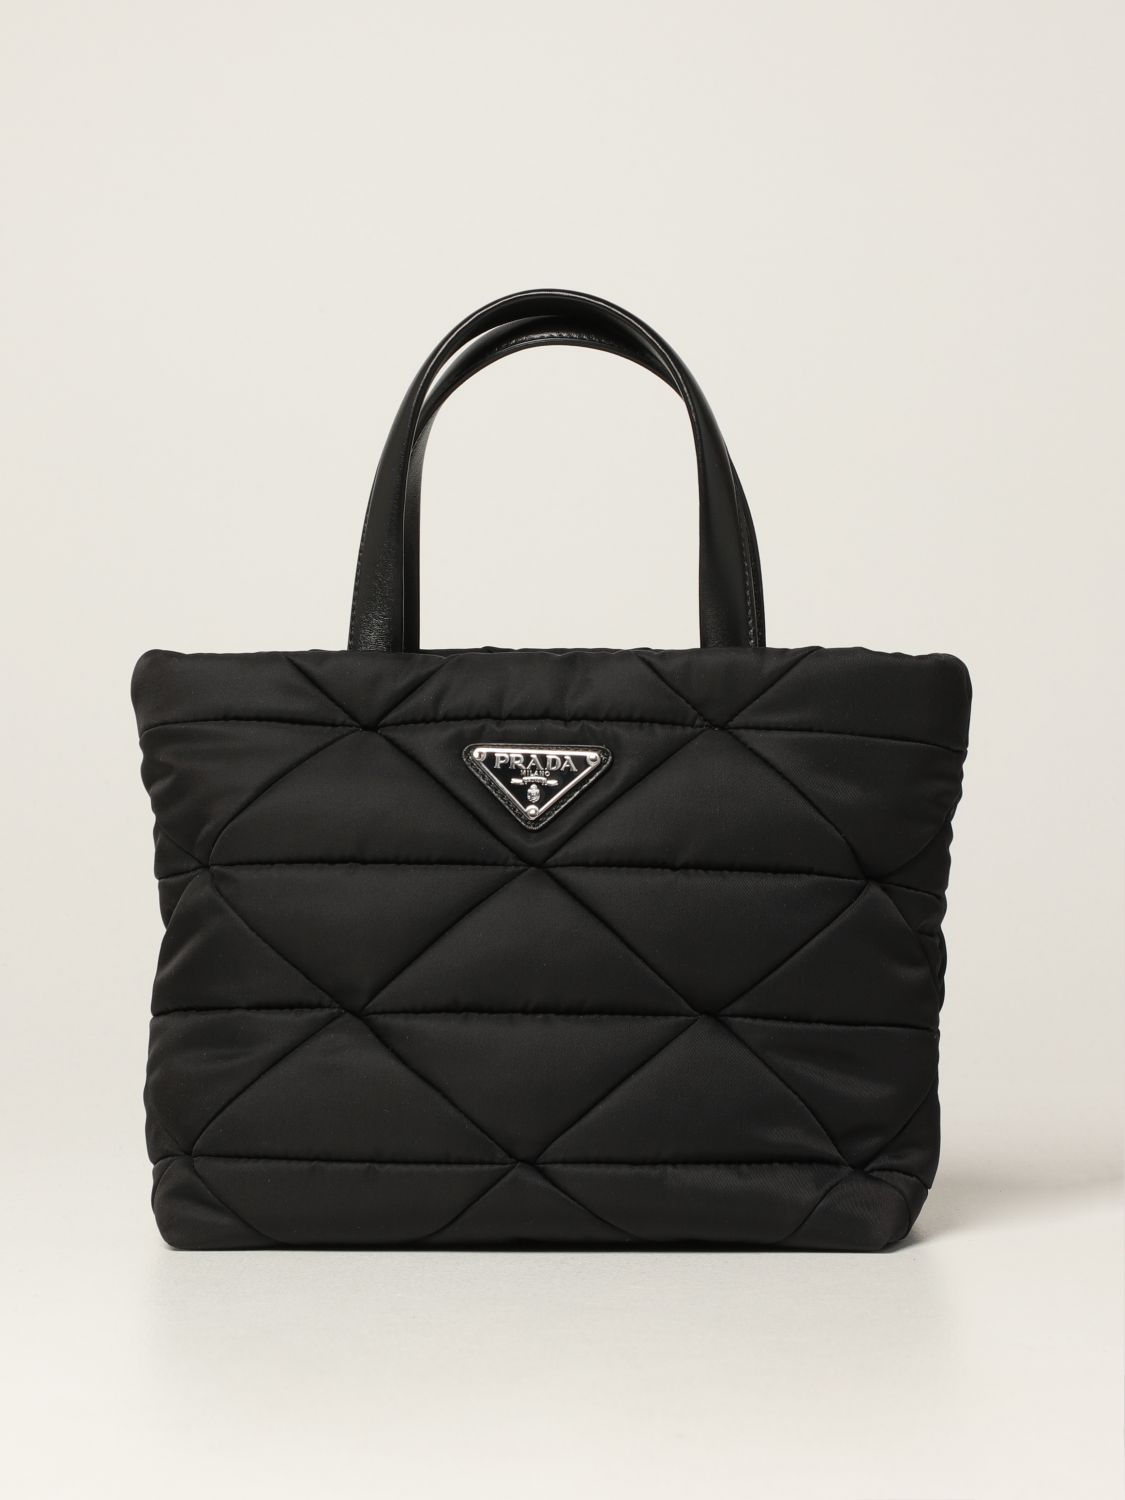 PRADA: bag in Re-nylon with triangular pattern - Black | Prada handbag ...